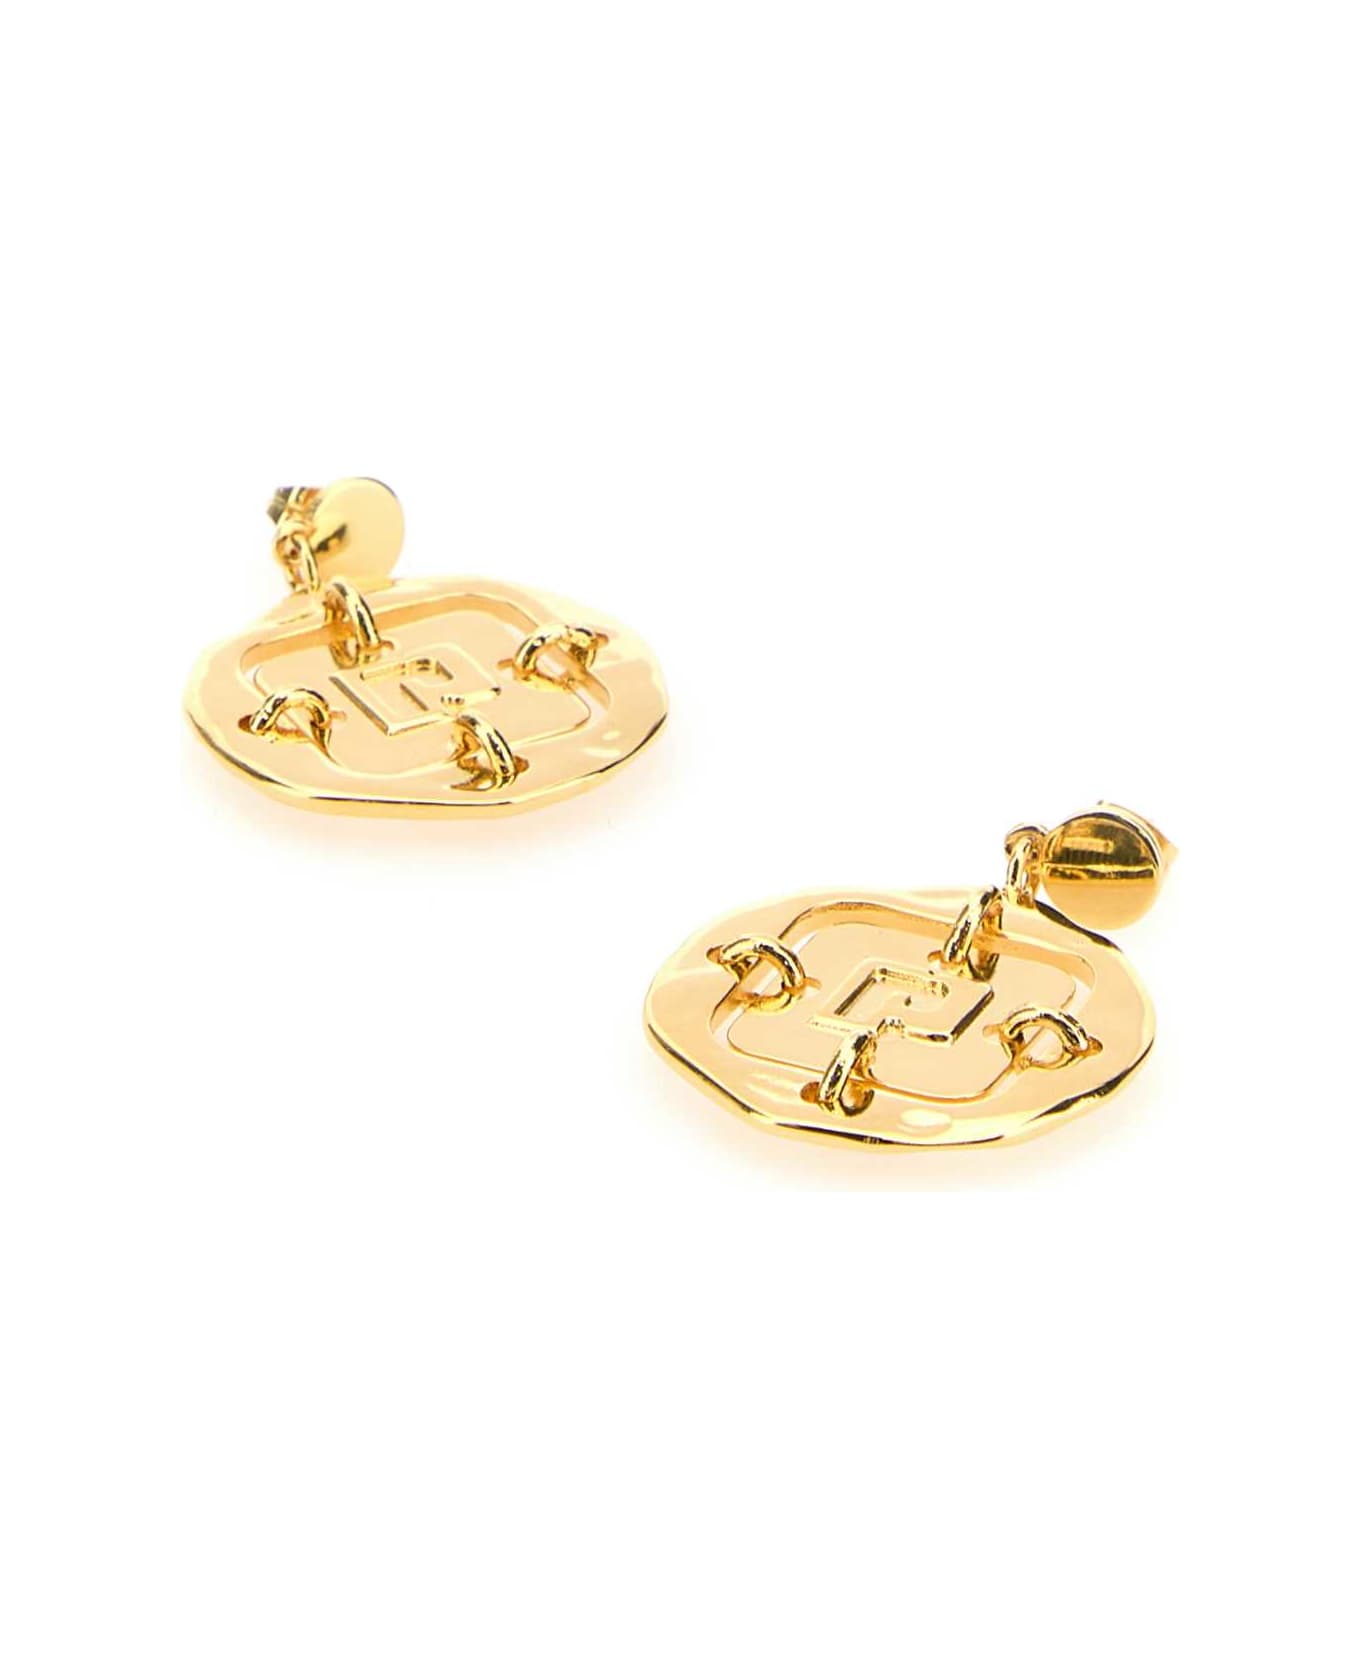 Paco Rabanne Gold Metal Earrings - GOLD